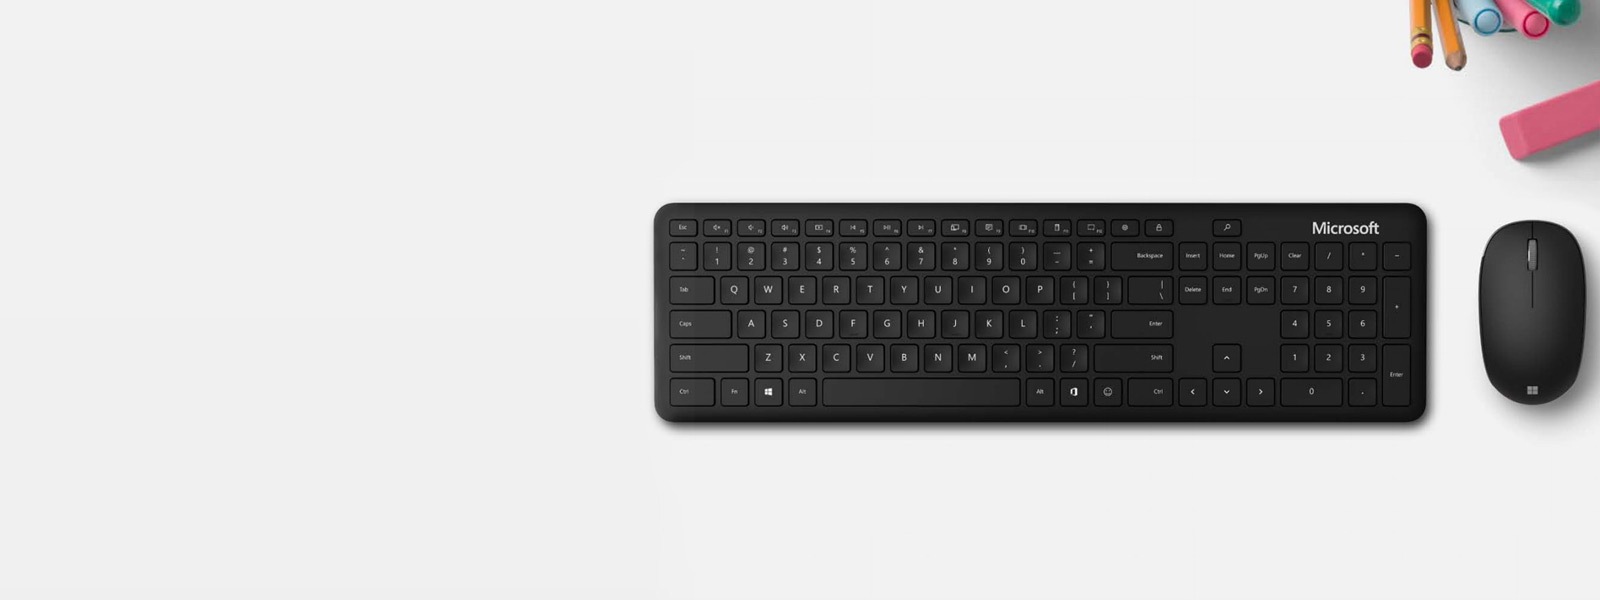 Клавиатура Microsoft Bluetooth Keyboard рядом с мышью Microsoft Bluetooth Mouse на столе с карандашом, маркером и ластиком
